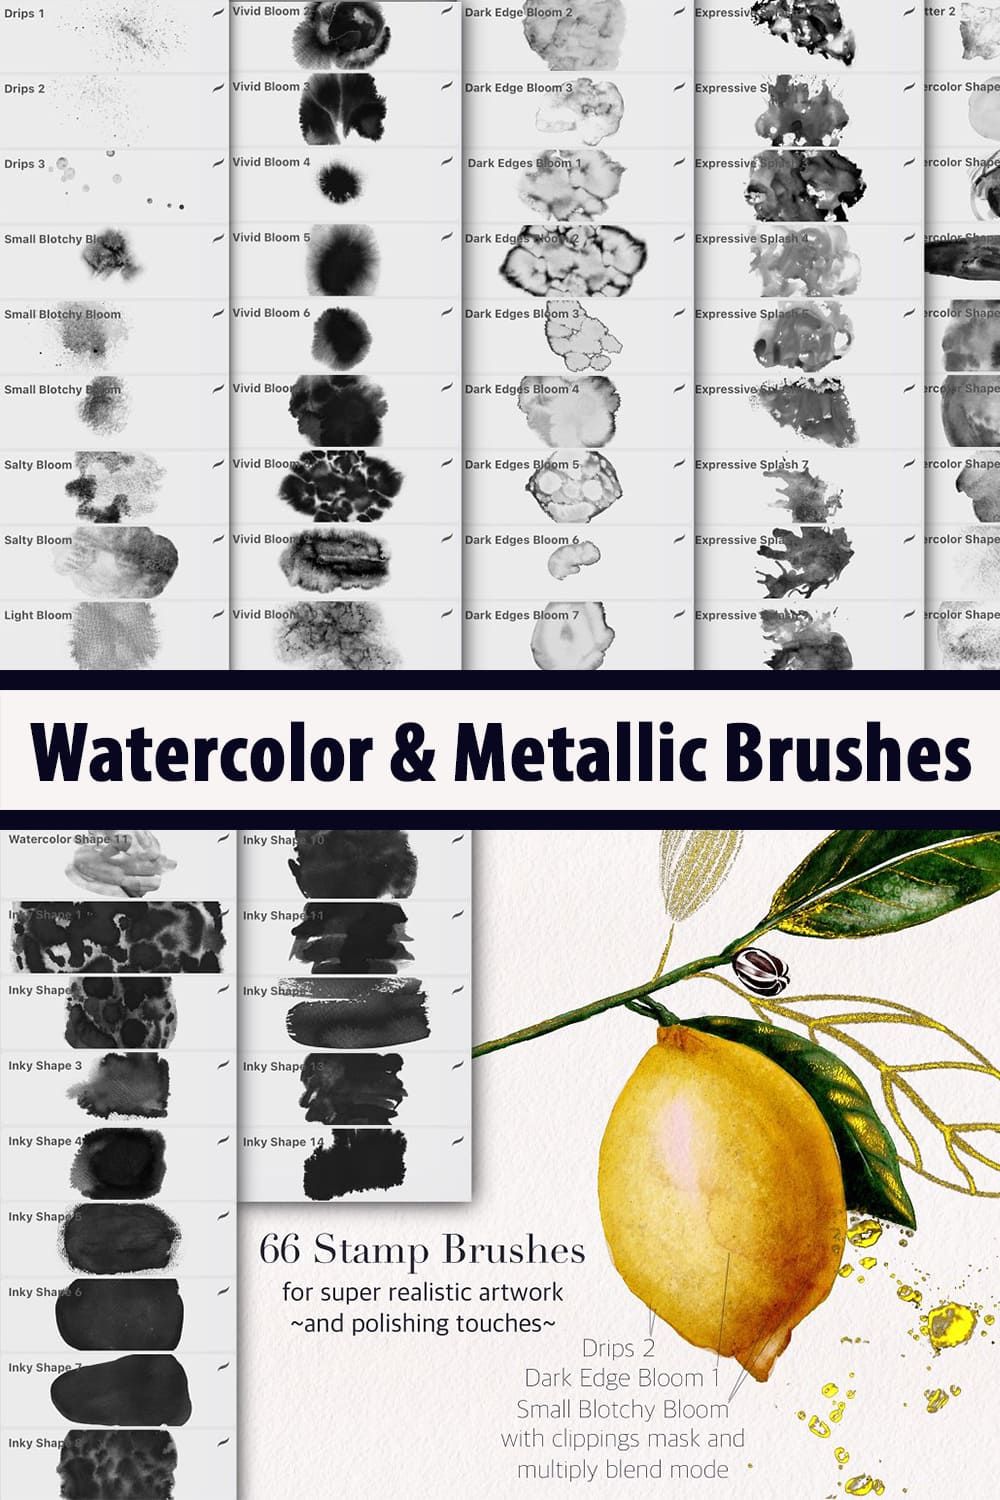 Watercolor & Metallic Brushes - Pinterest.